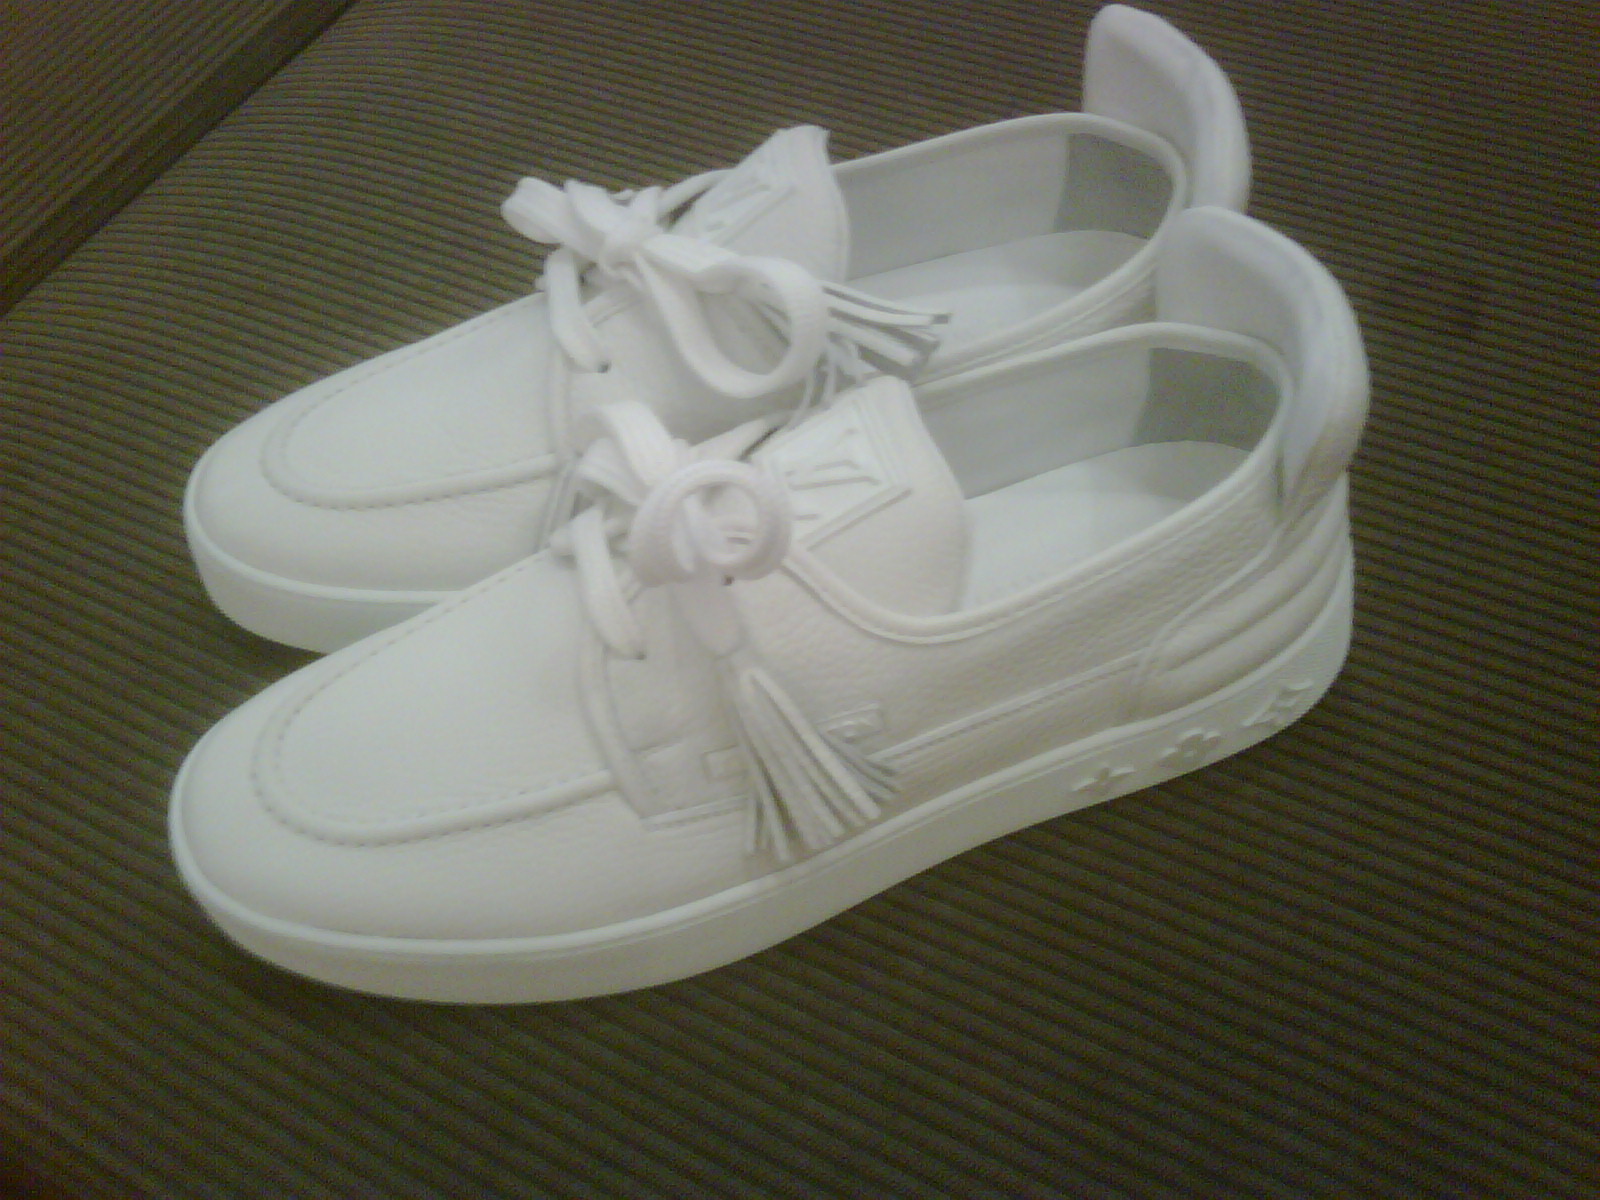 EMM (pronounced EdoubleM): Louis Vuitton Kanye West Mr. Hudson Boat Shoes